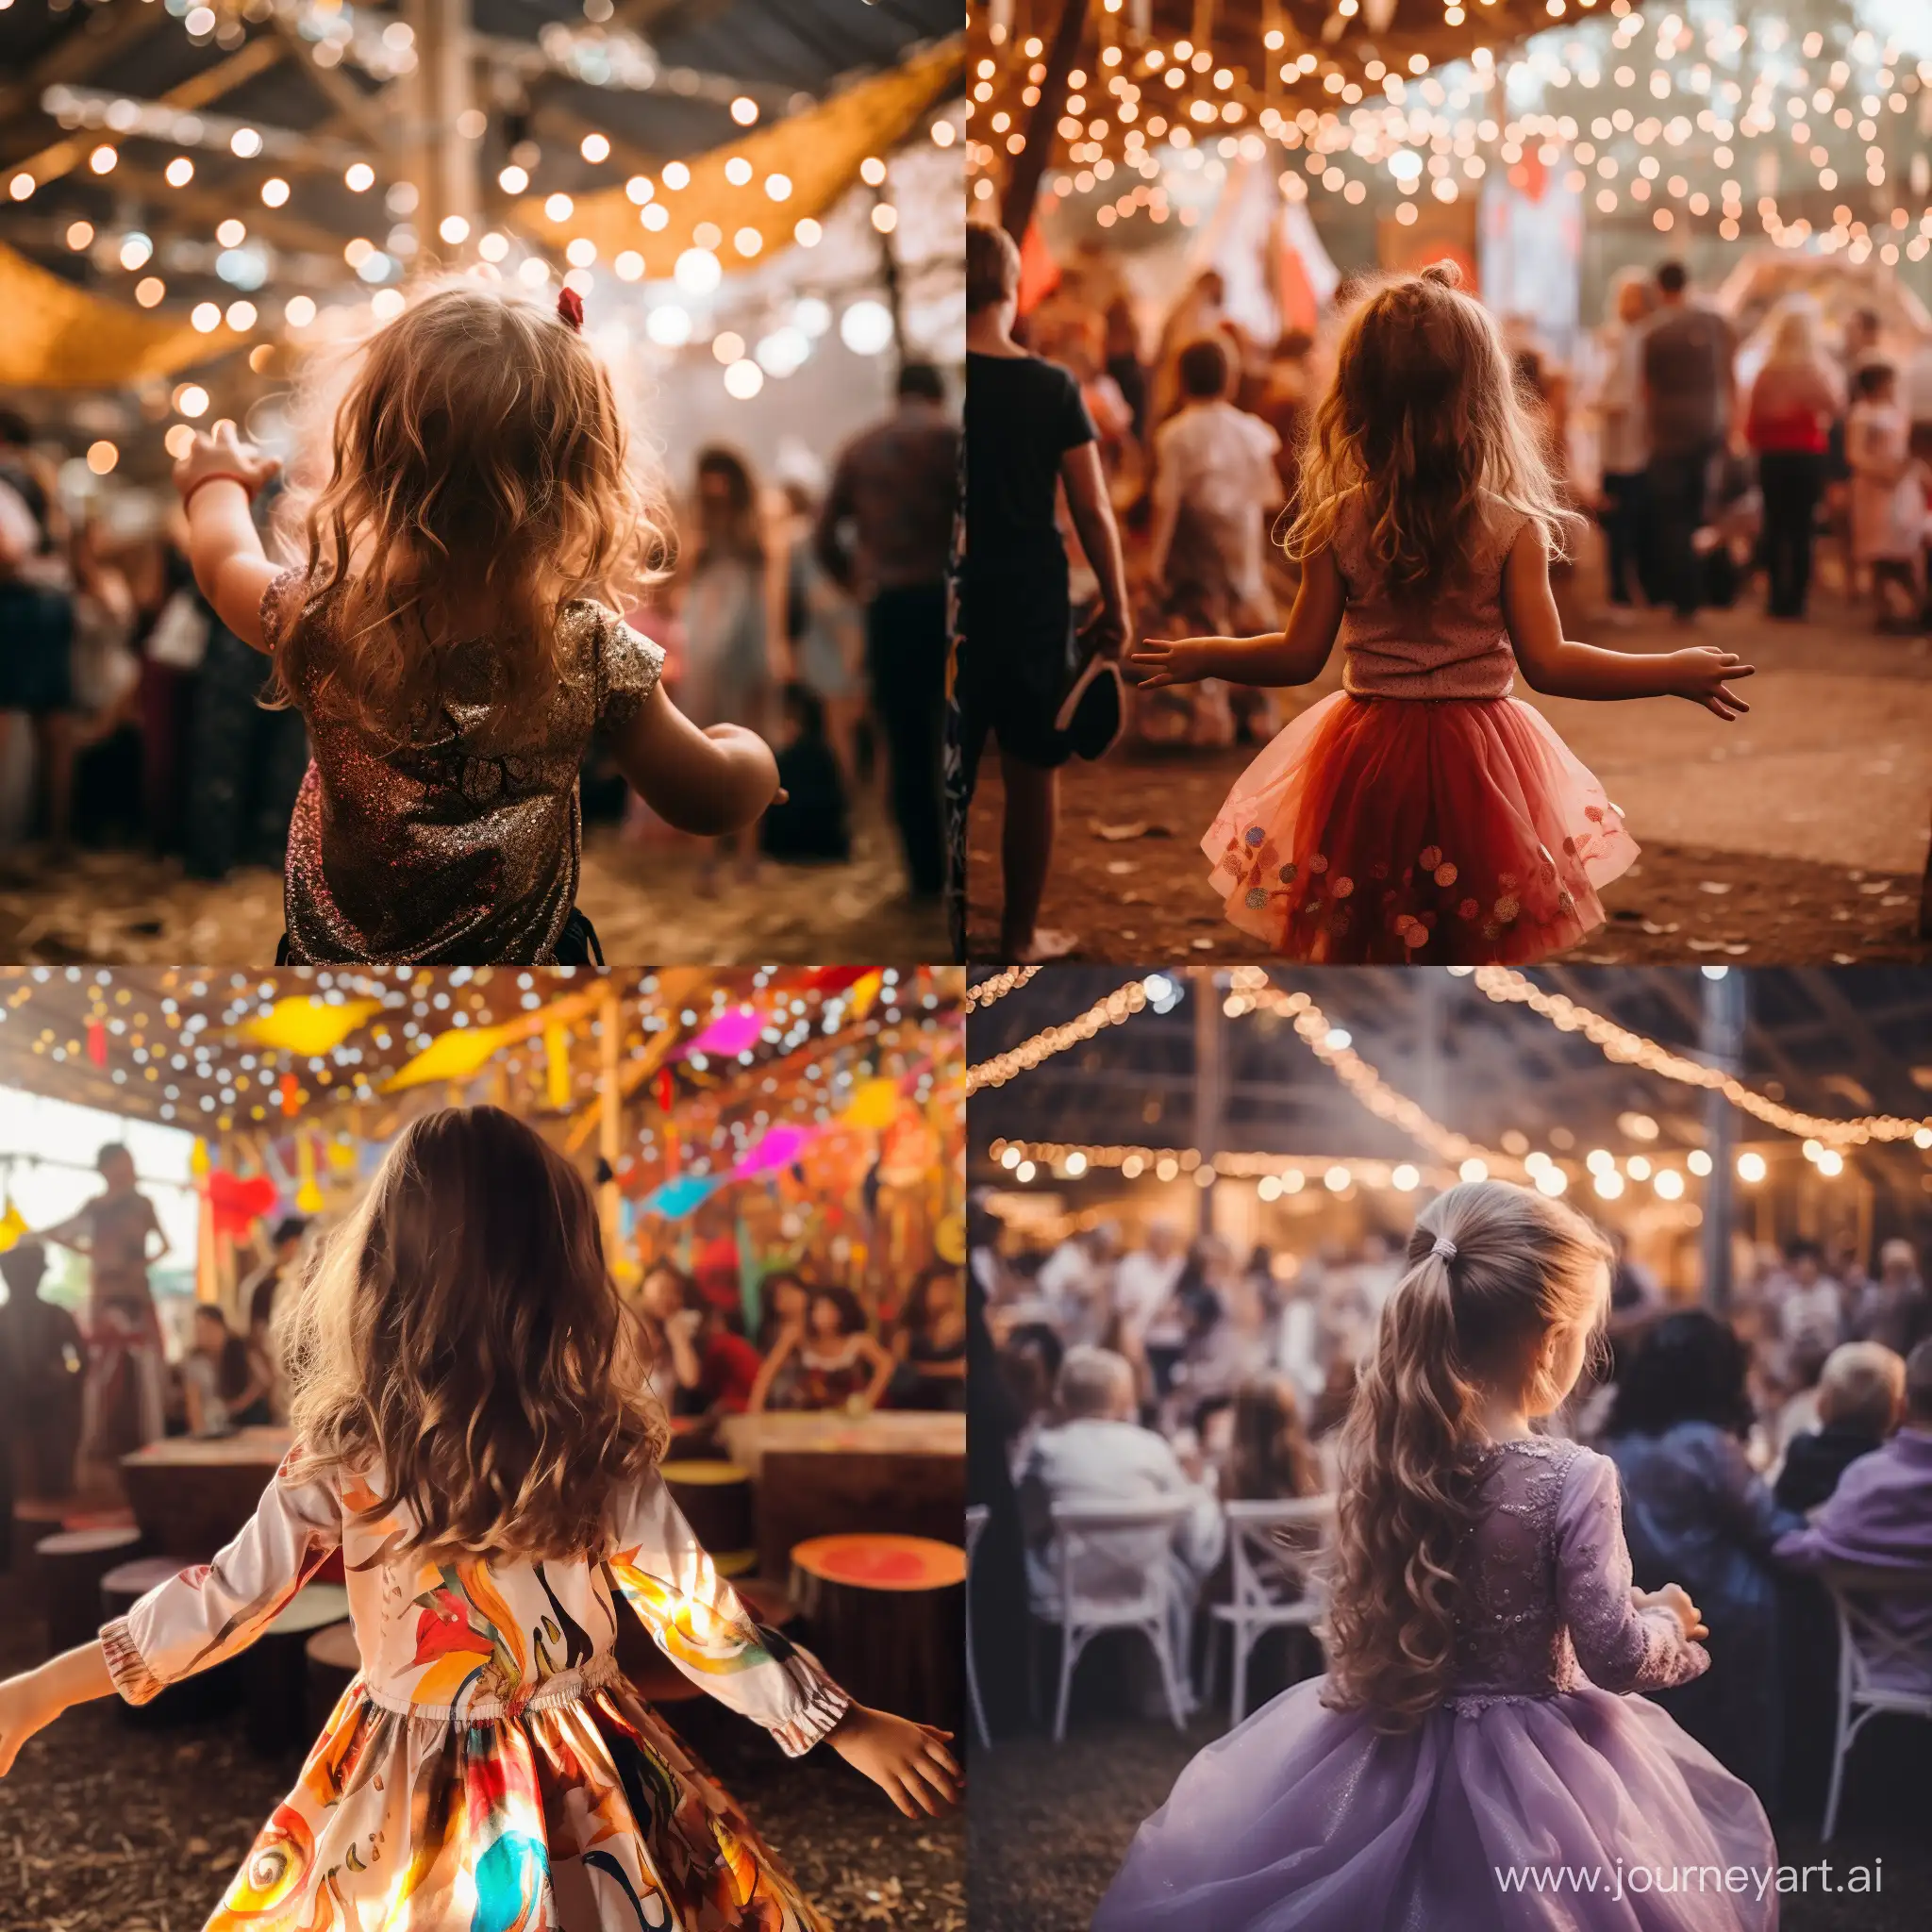 Enchanting-Celebration-Little-Girl-Dancing-at-Party